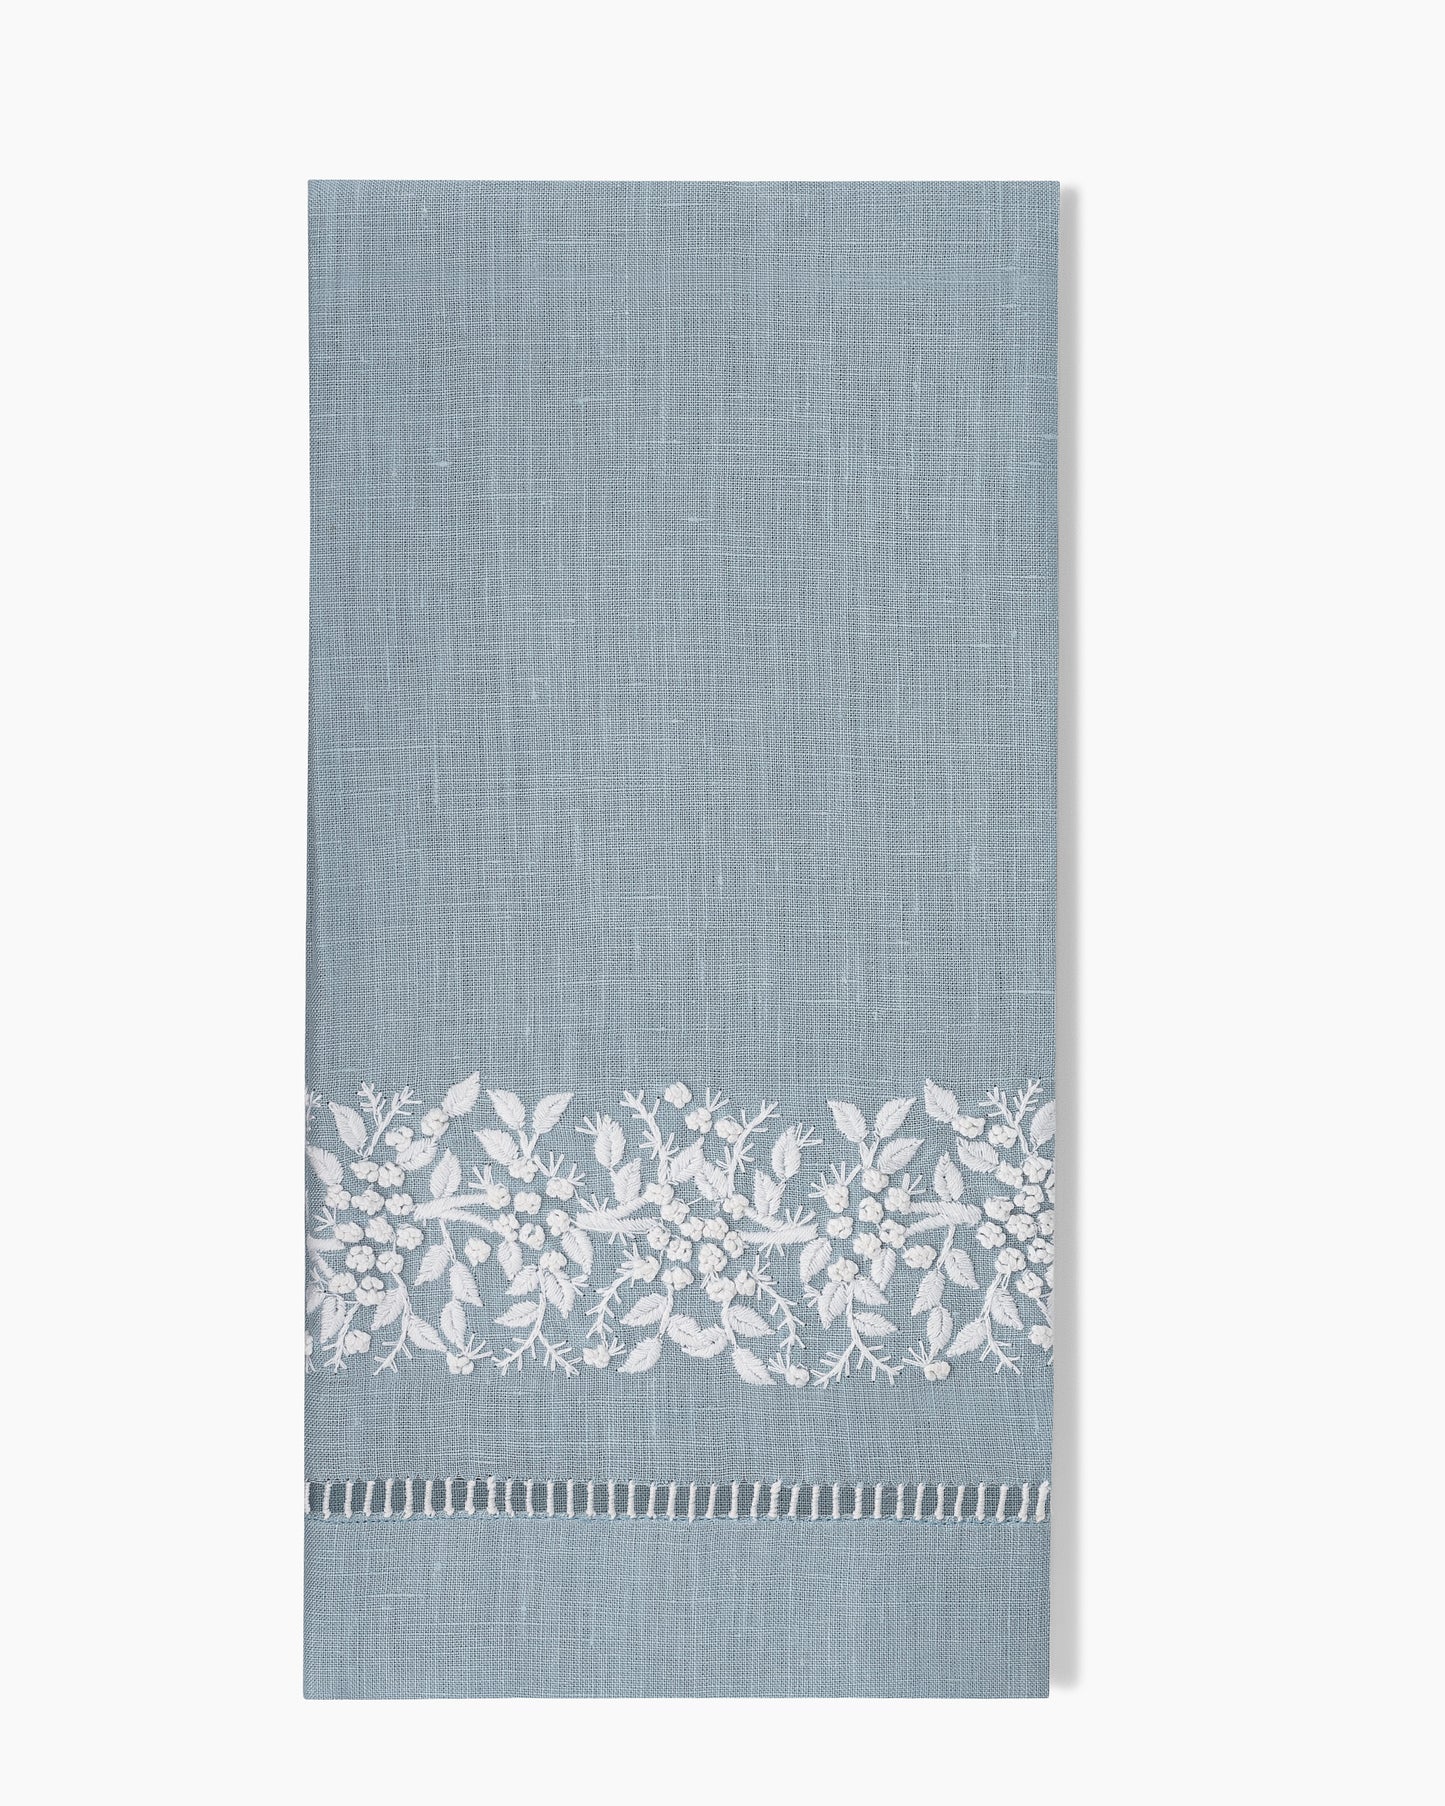 Jardin Classic Linen Hand Towel - Six Colors